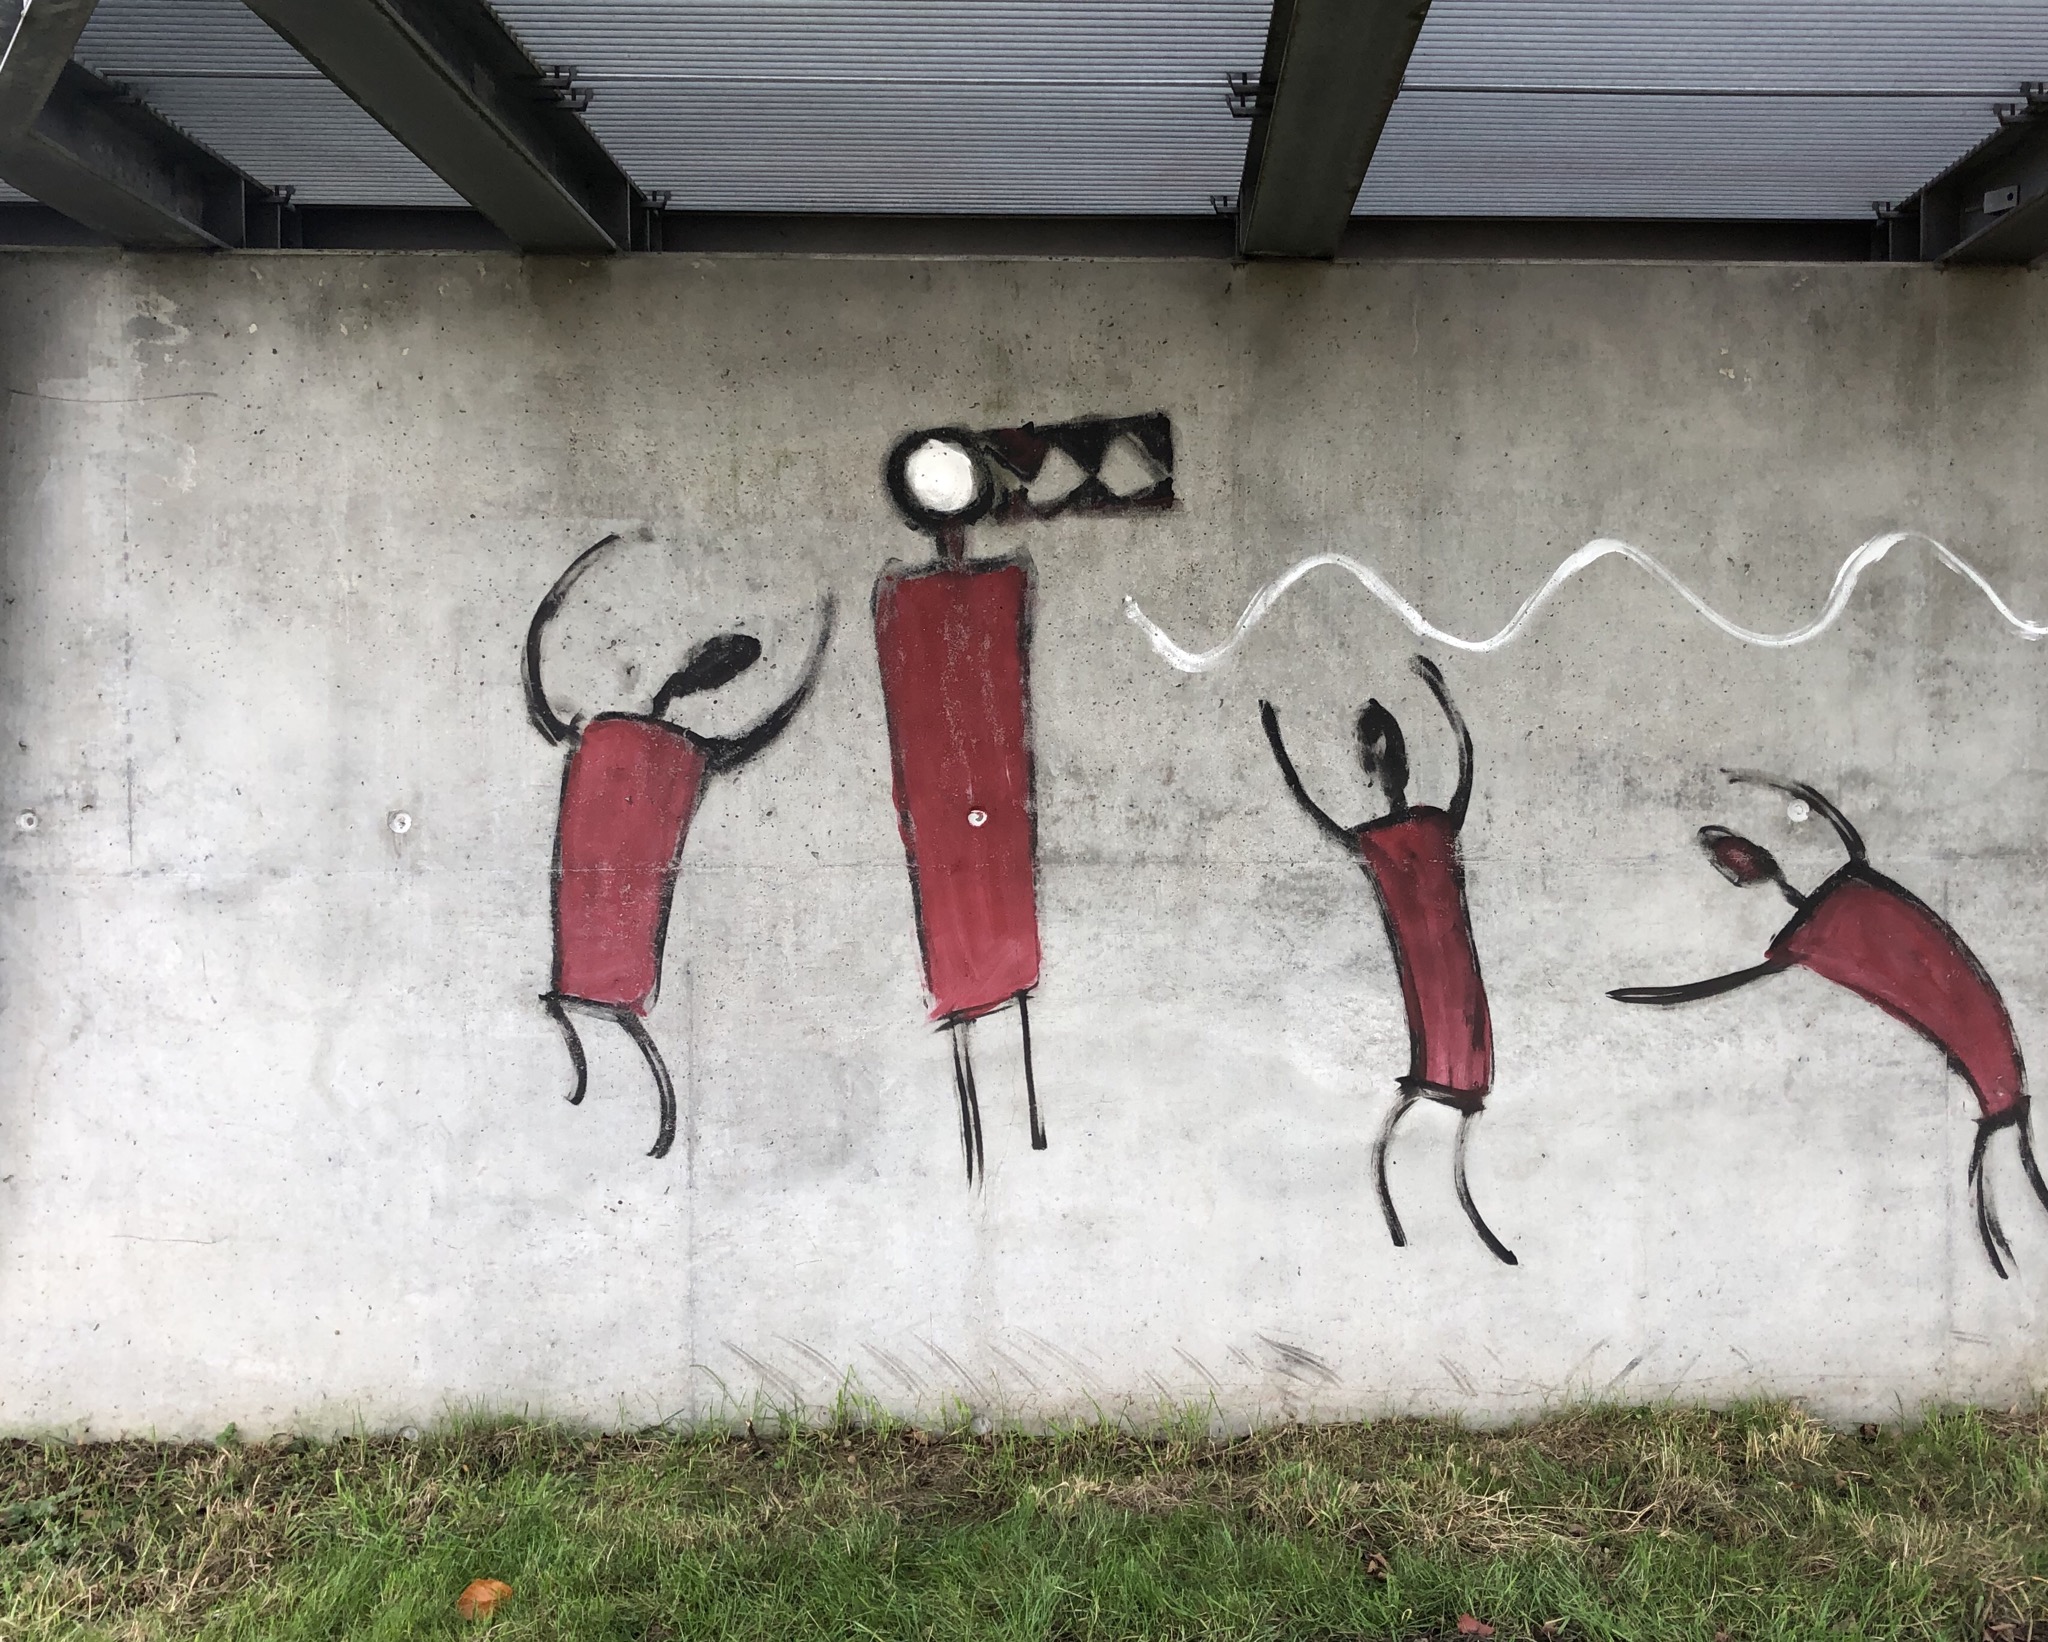 Graffiti 4546 Tribesmen rising in Kiel Germany